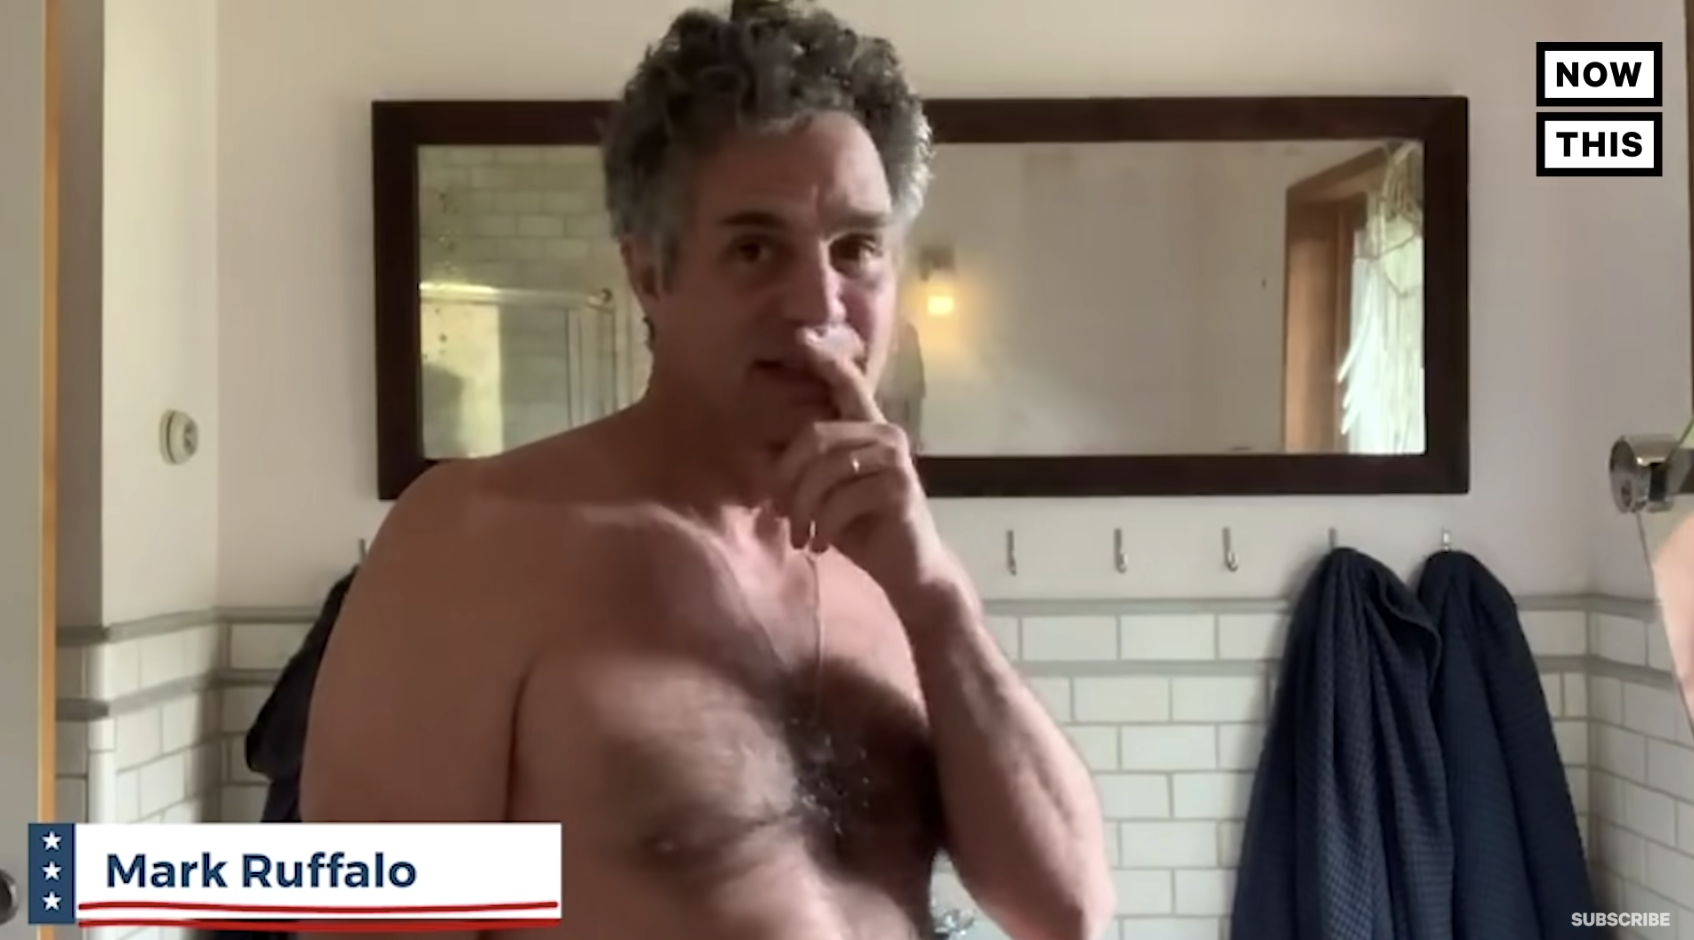 Mark Ruffalo shirtless in the NowThis PSA